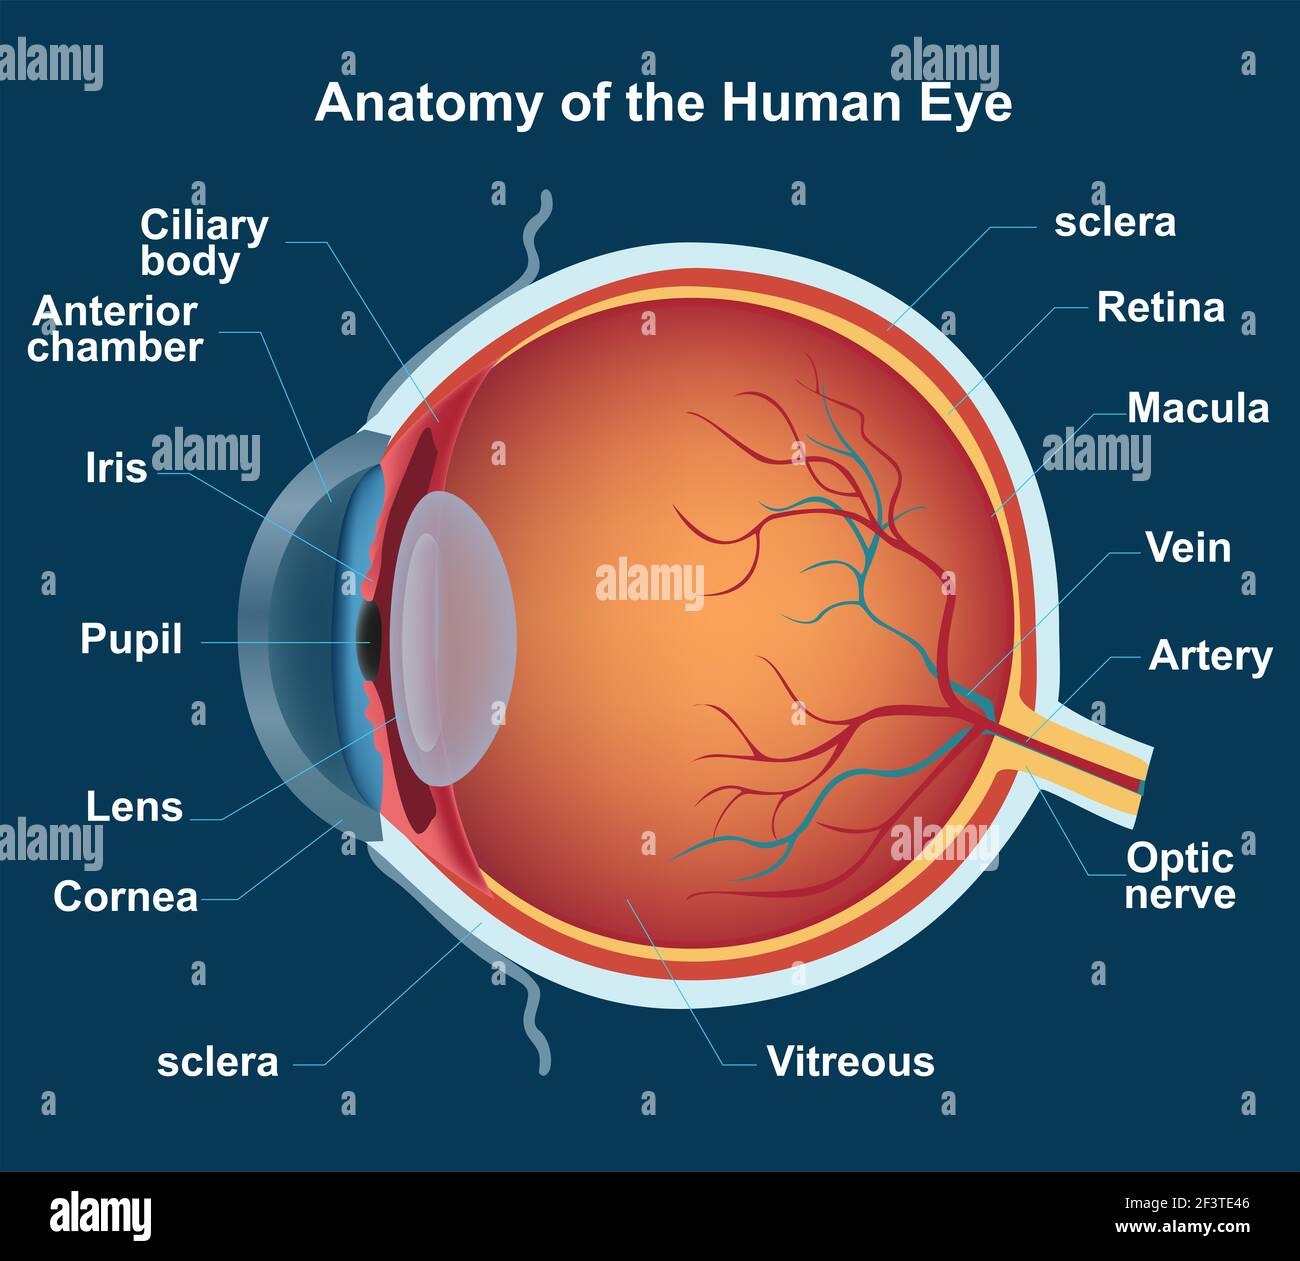 anatomia del ojo humano Stock Photo